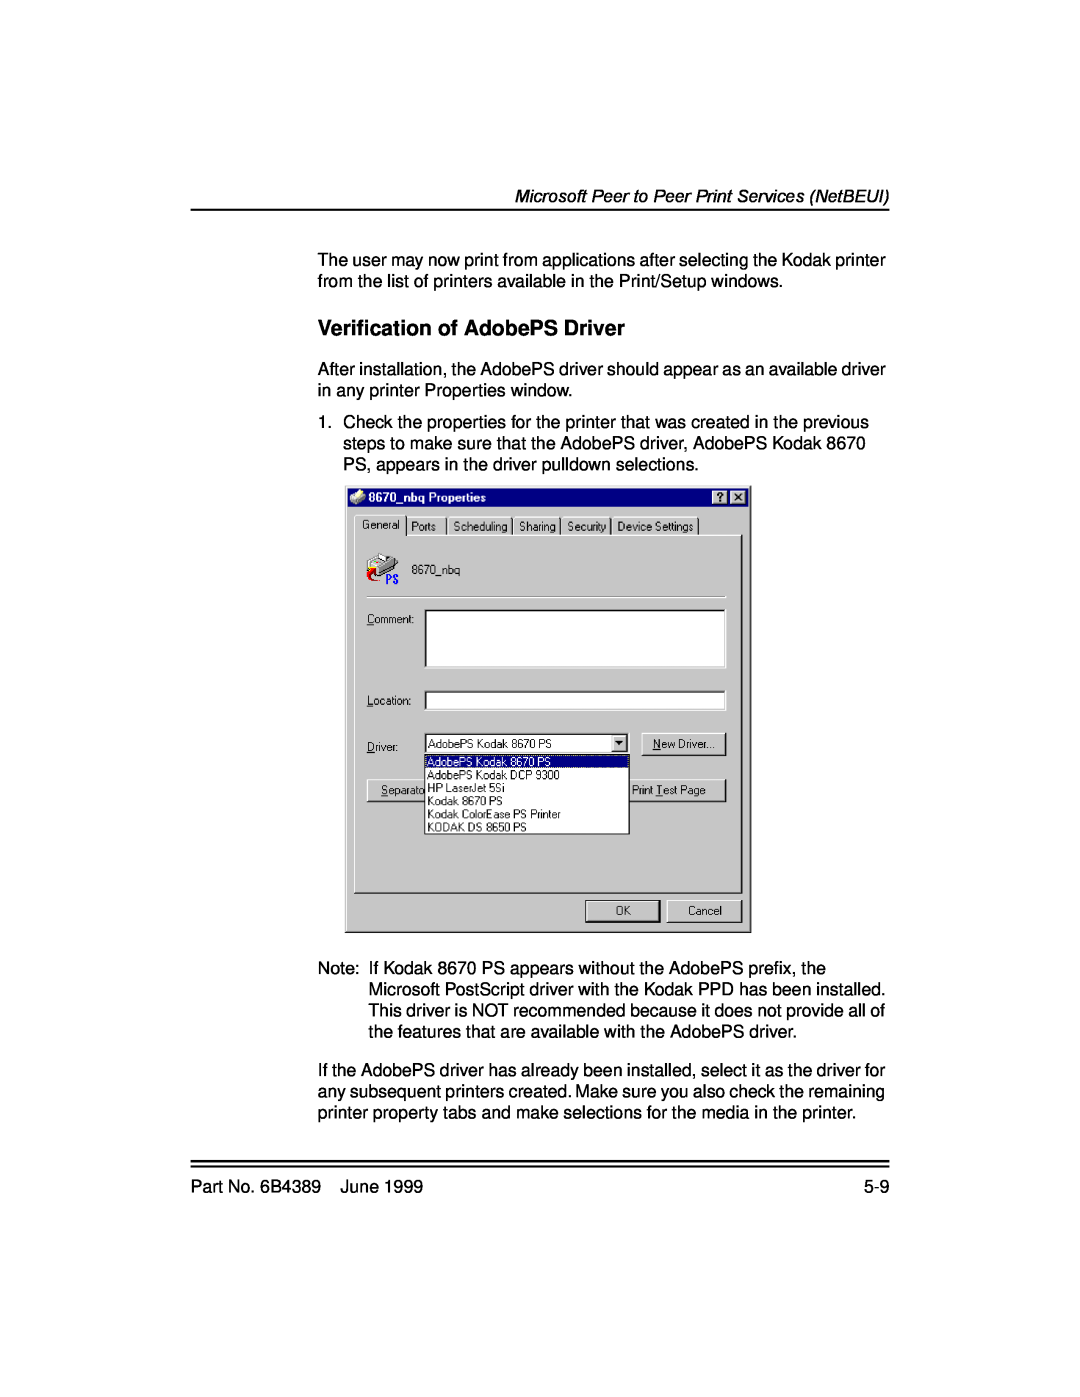 Kodak 8660, 8670 manual Veriﬁcation of AdobePS Driver, Microsoft Peer to Peer Print Services NetBEUI 